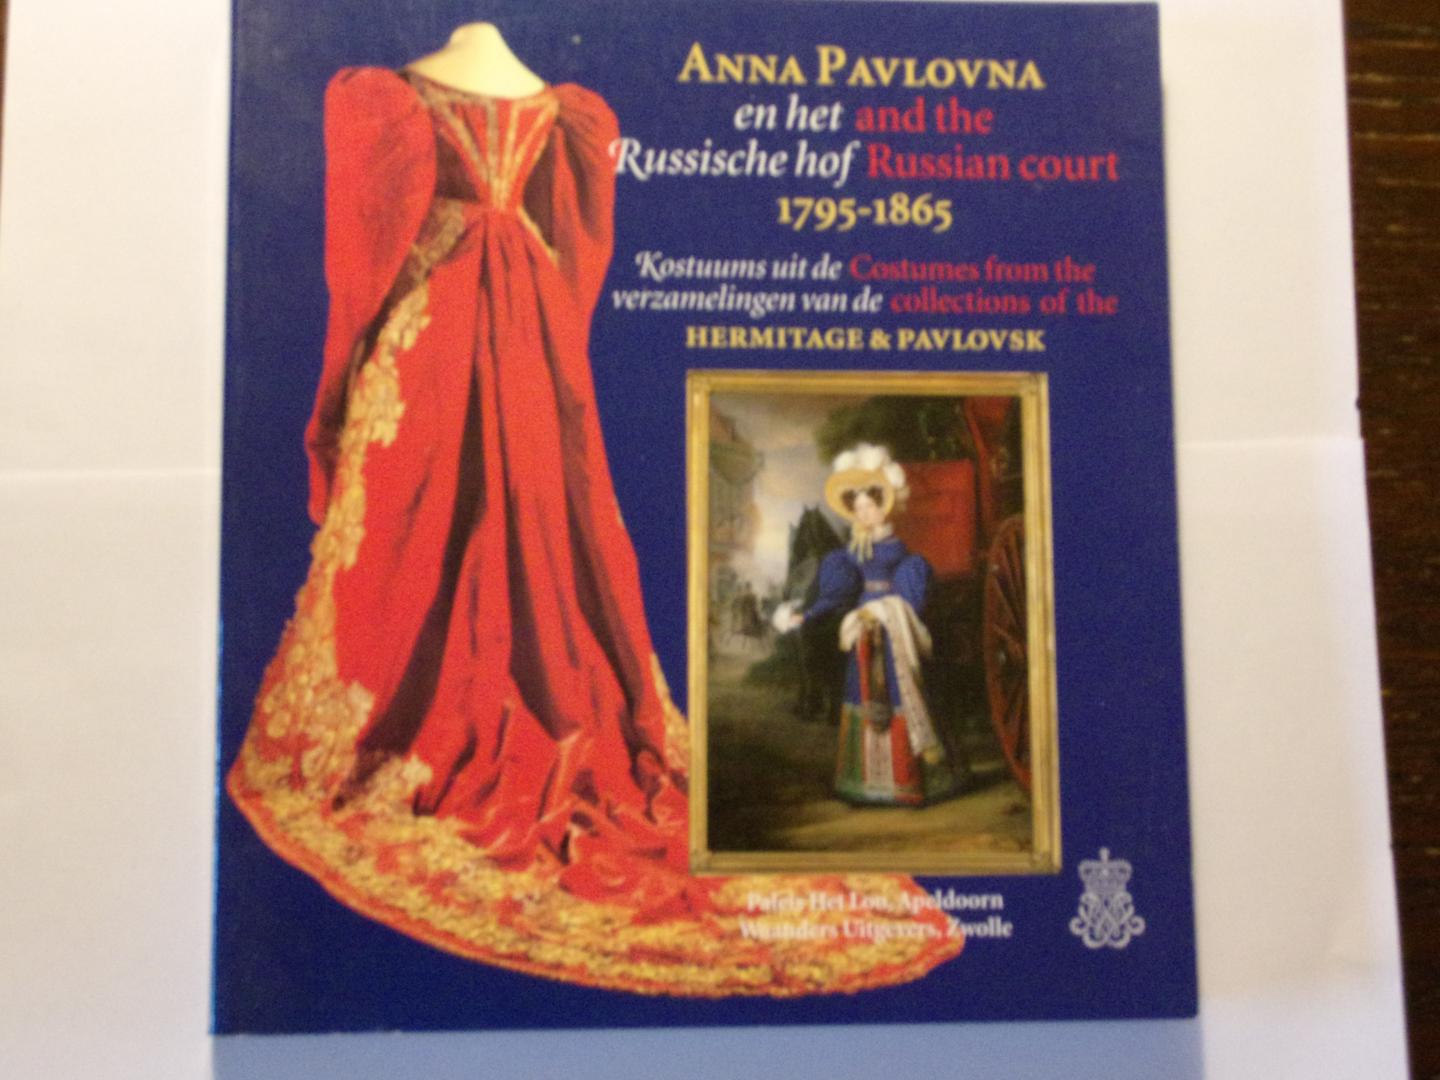  - Anna Pavlovna en het Russische hof 1795-1865 = Anna Pavlovna and the Russian court 1795-1865